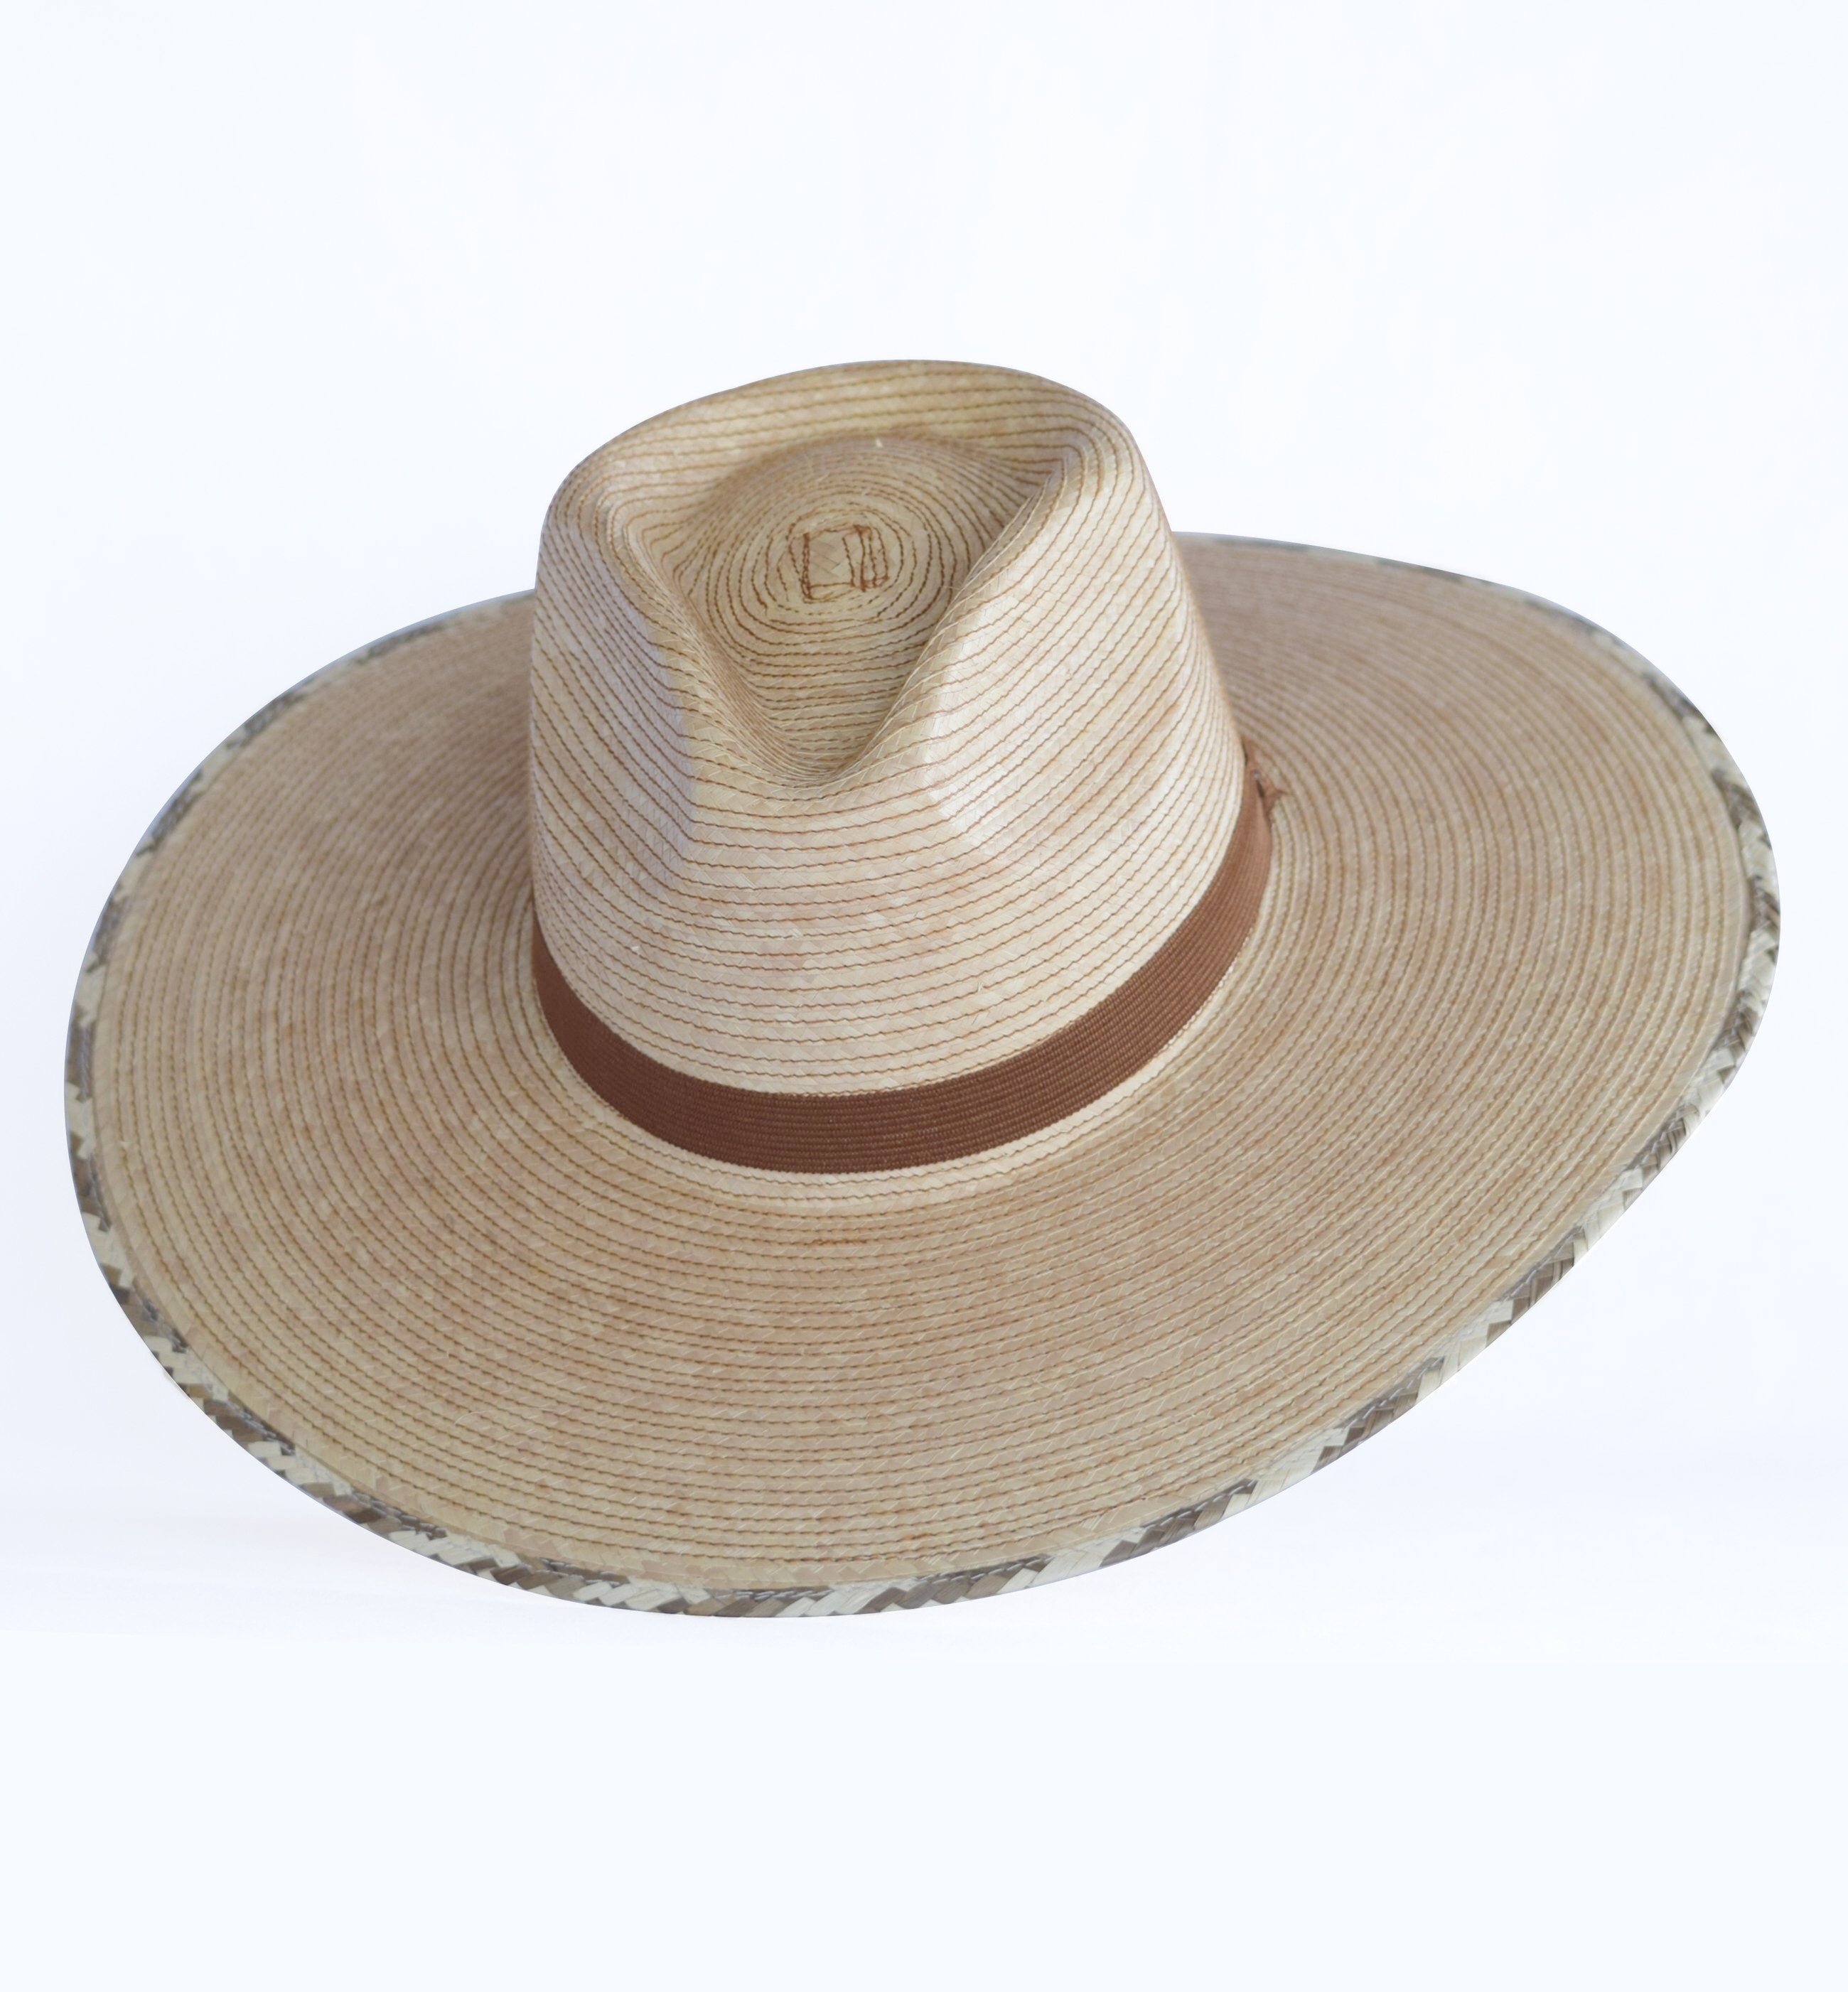 Studio Maya Mercado Straw Cowboy Hat 